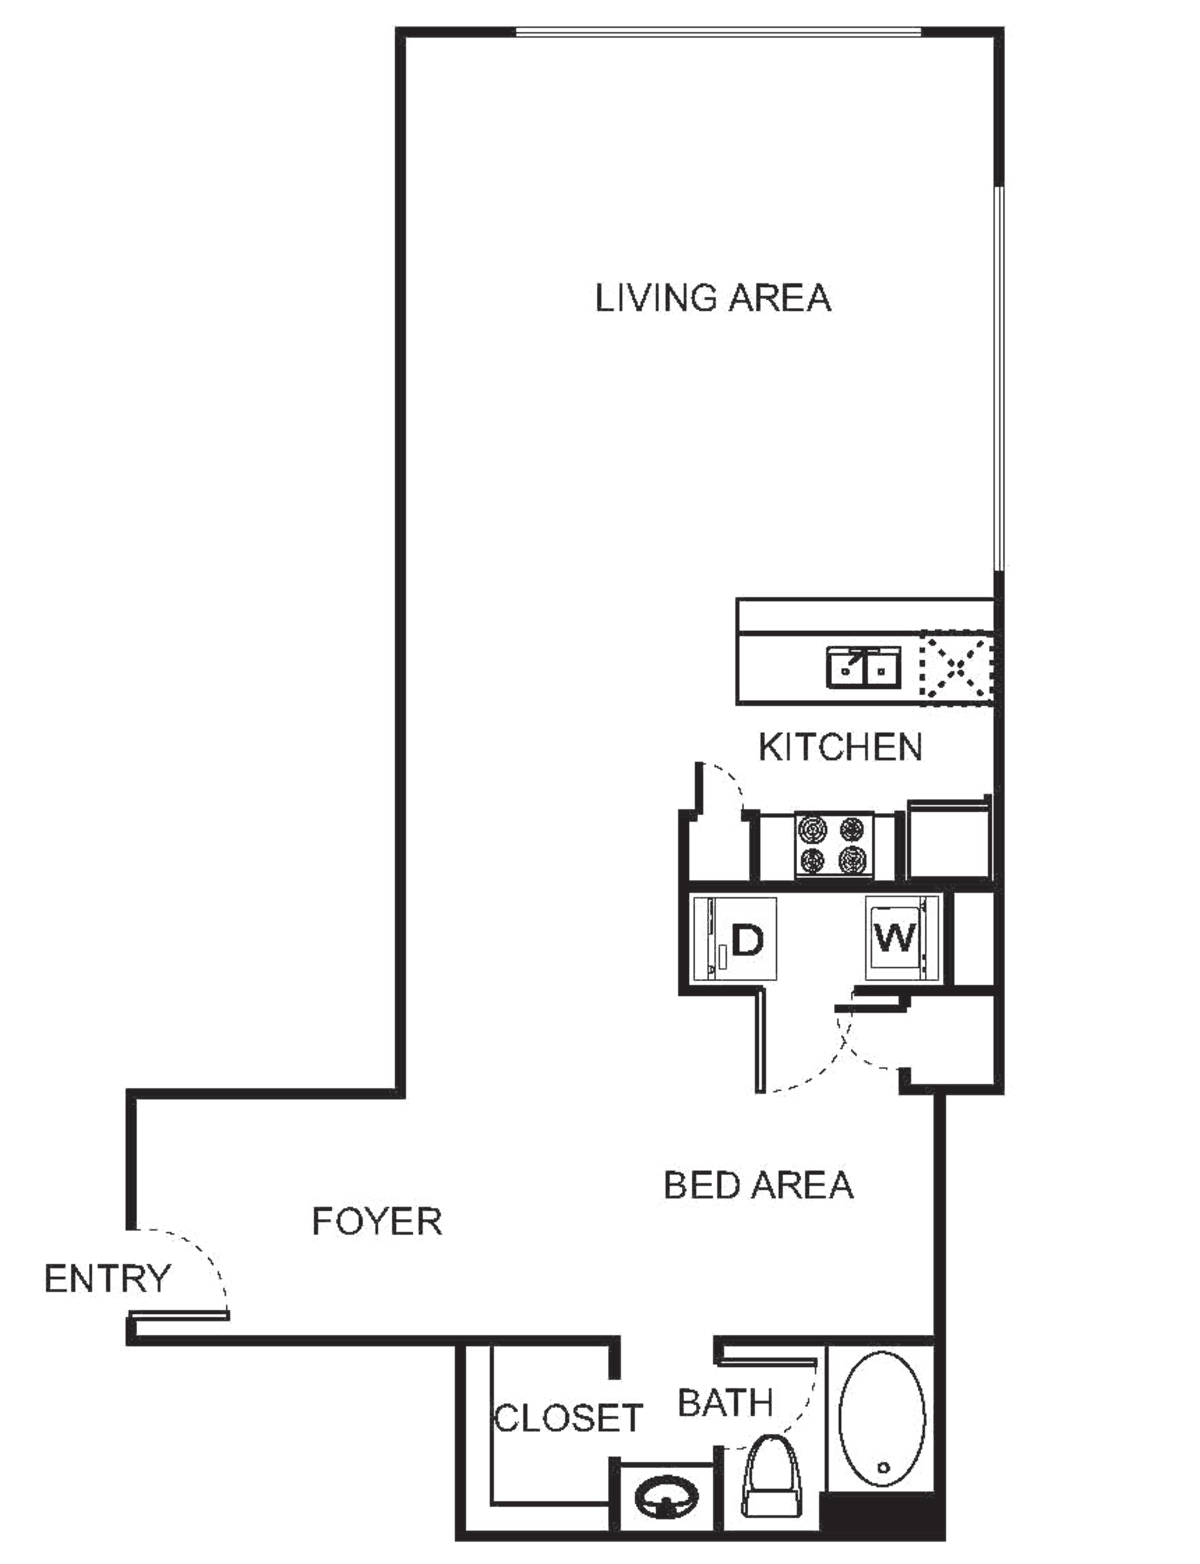 Floorplan diagram for OC Studio, showing Studio